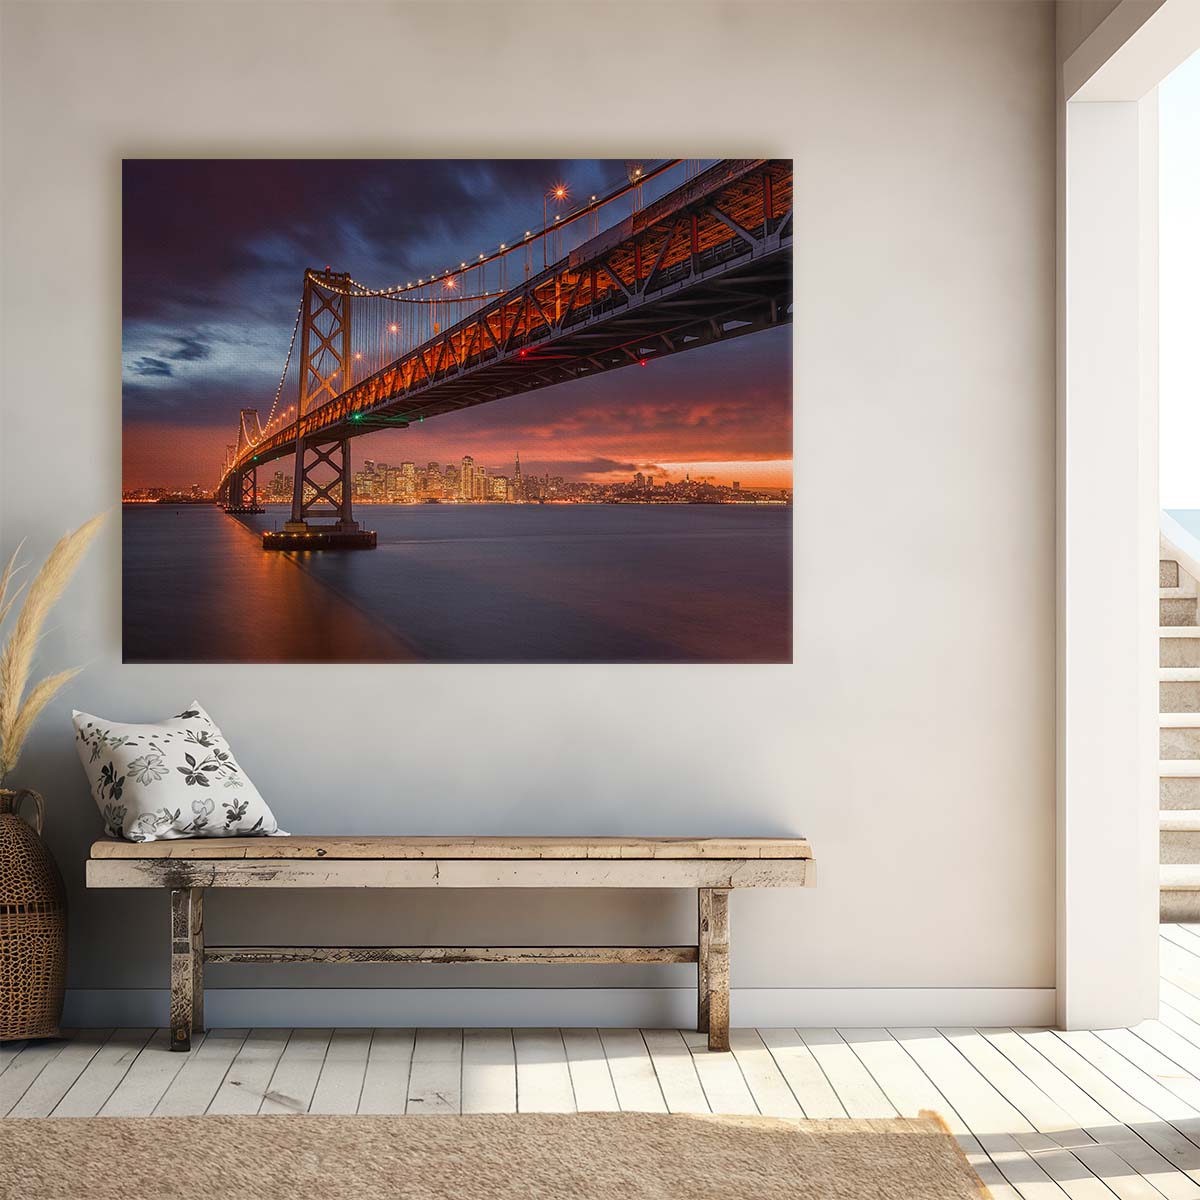 San Francisco Golden Gate Bridge Sunset Wall Art by Luxuriance Designs. Made in USA.